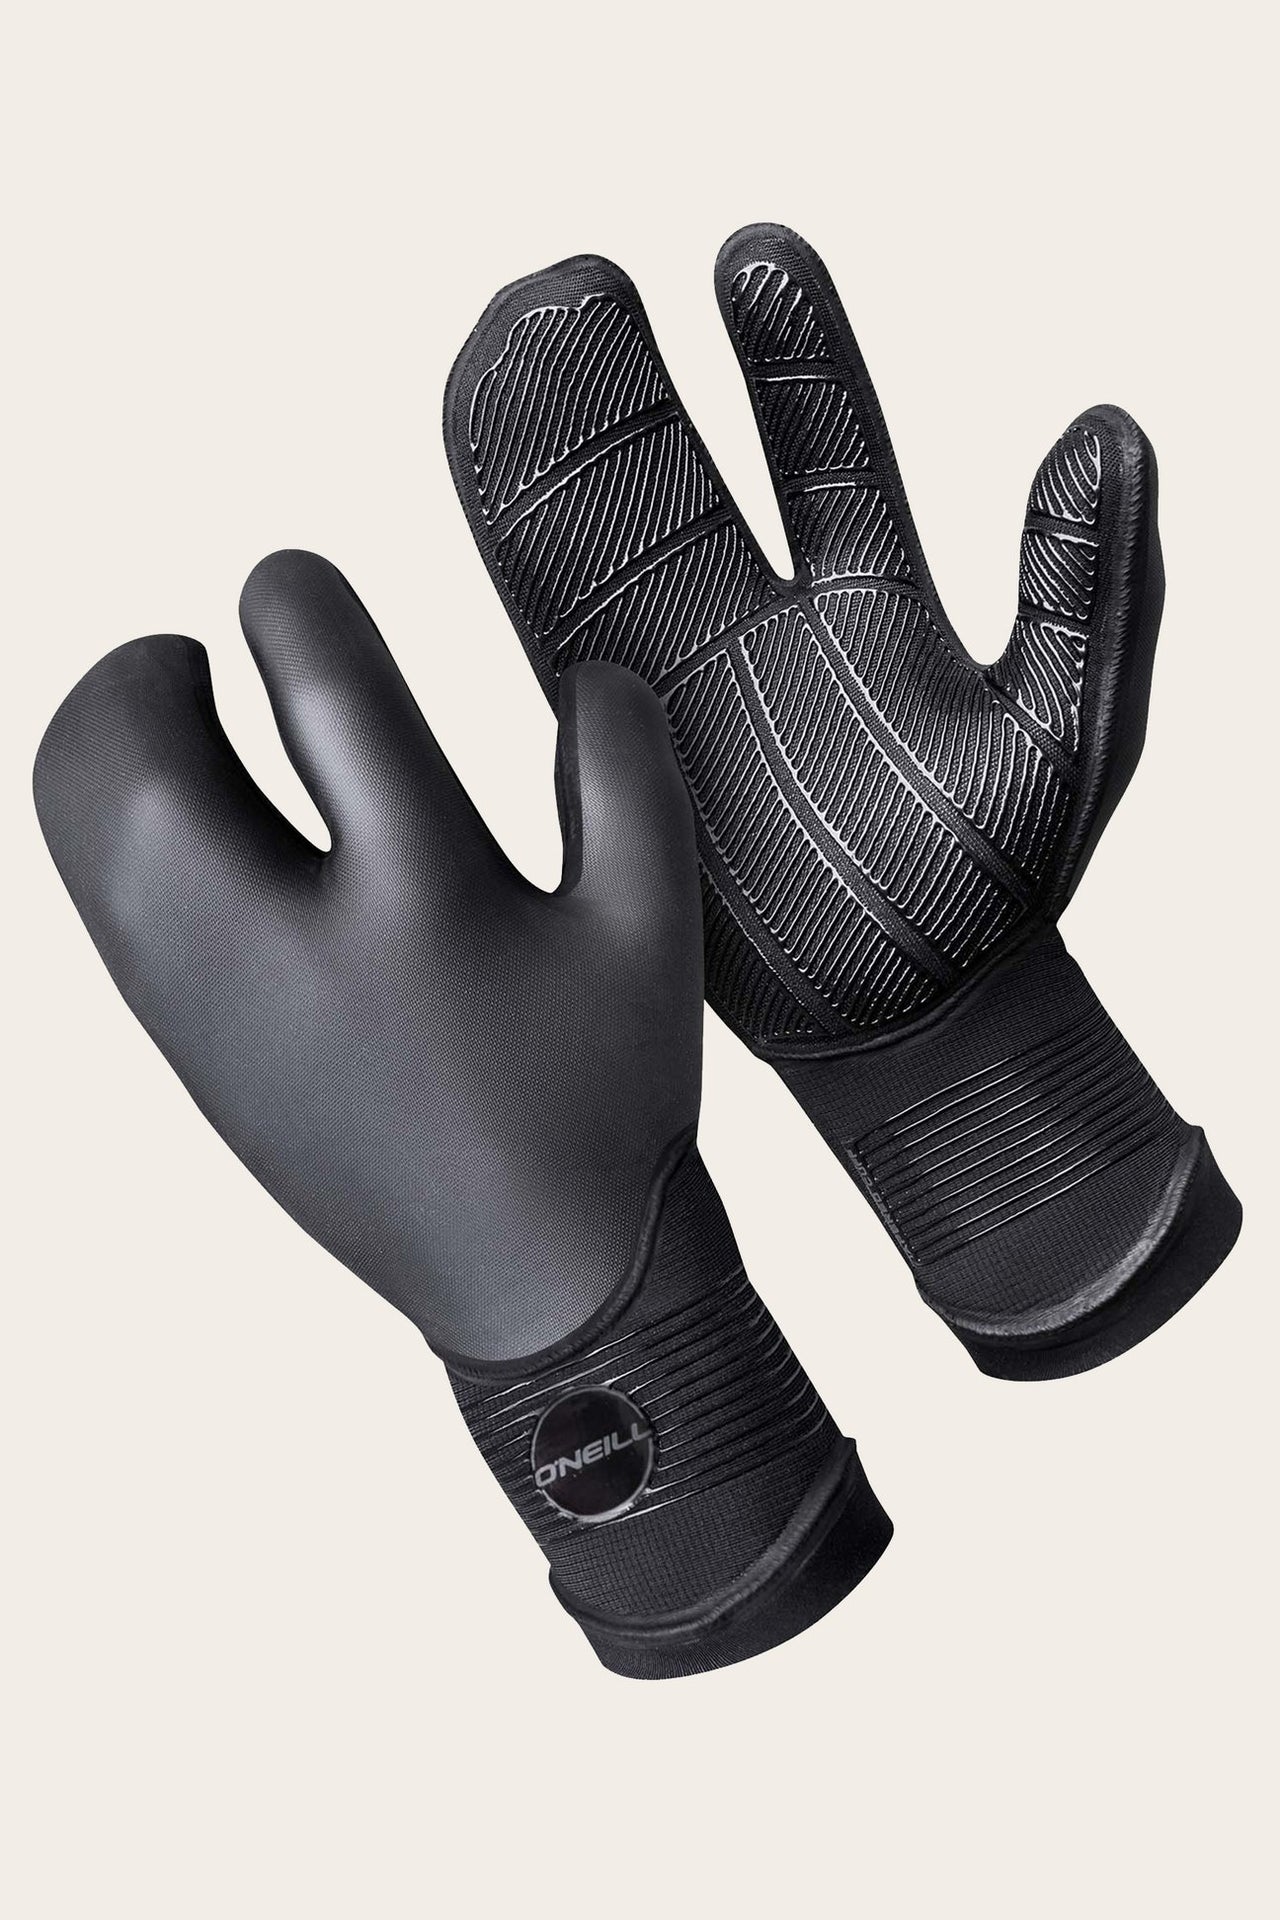 O'neill Psycho Tech Lobster Glove 7mm | 2020 | Pre-Order